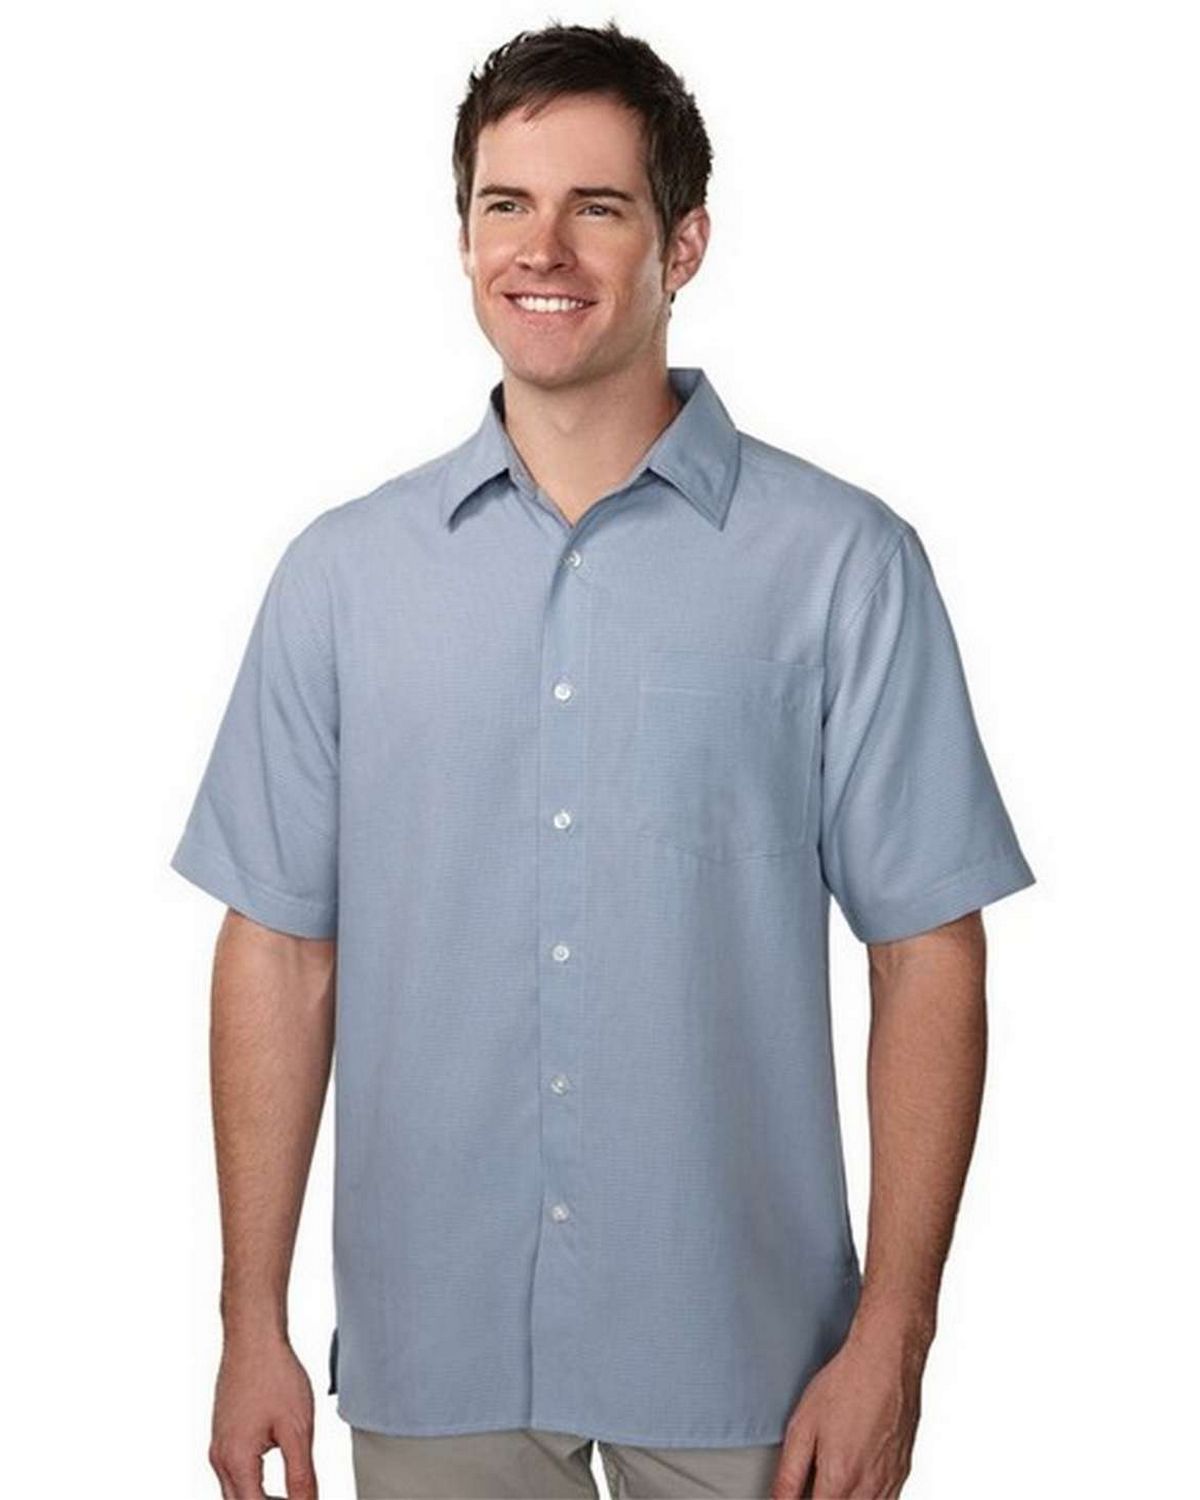 Buy Tri-Mountain 776 Men's 64% Modal 36% Polyester SS Woven Shirts